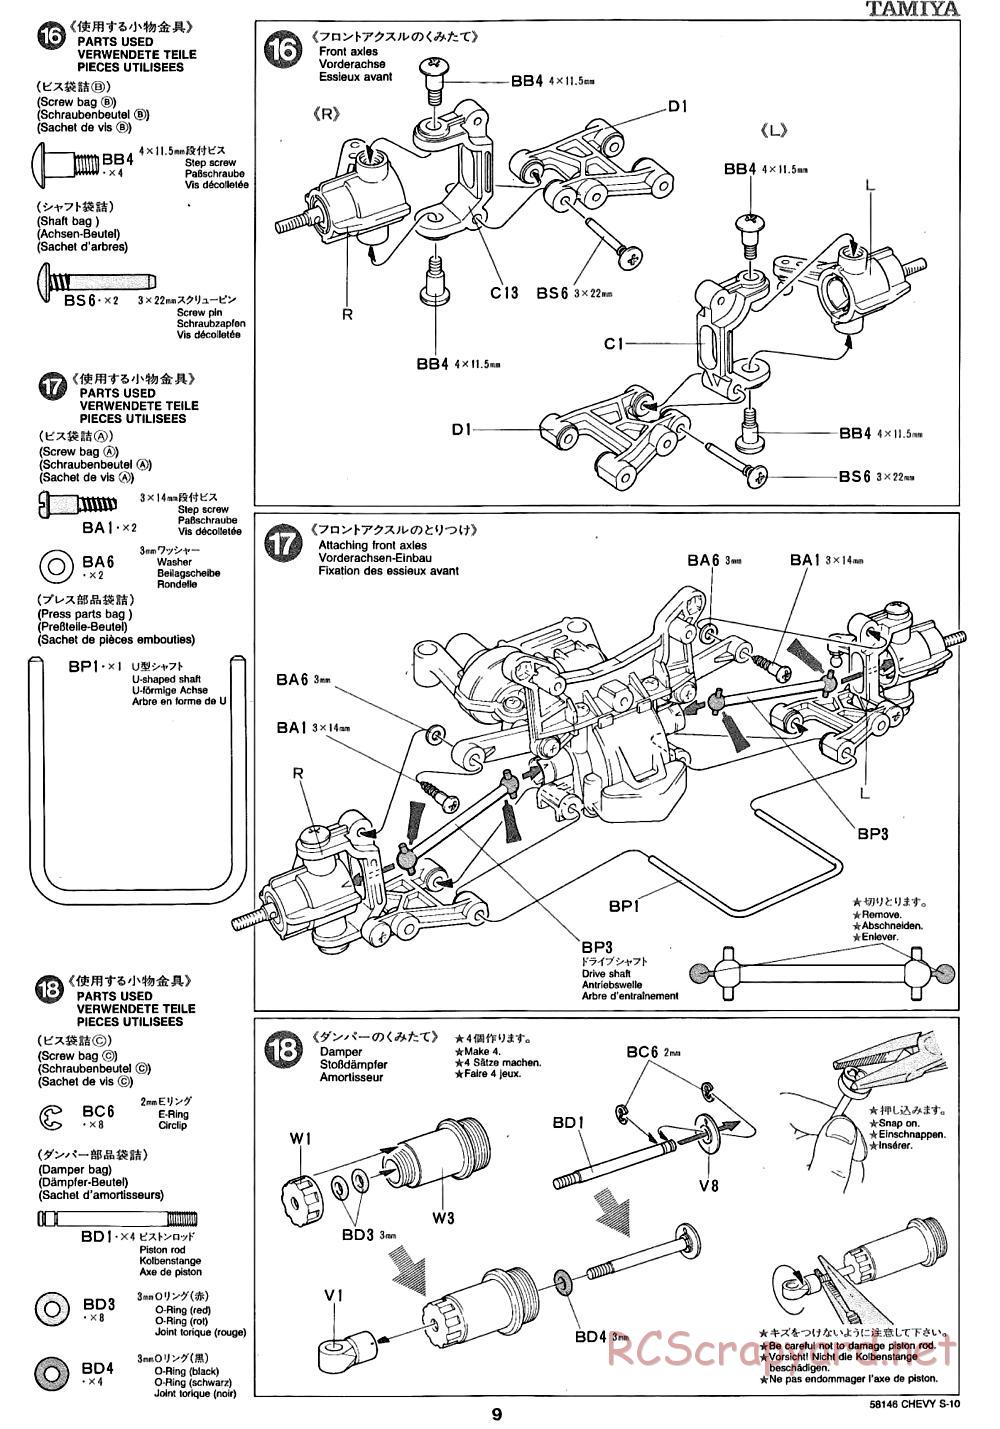 Tamiya - Chevy S-10 Chassis - Manual - Page 9